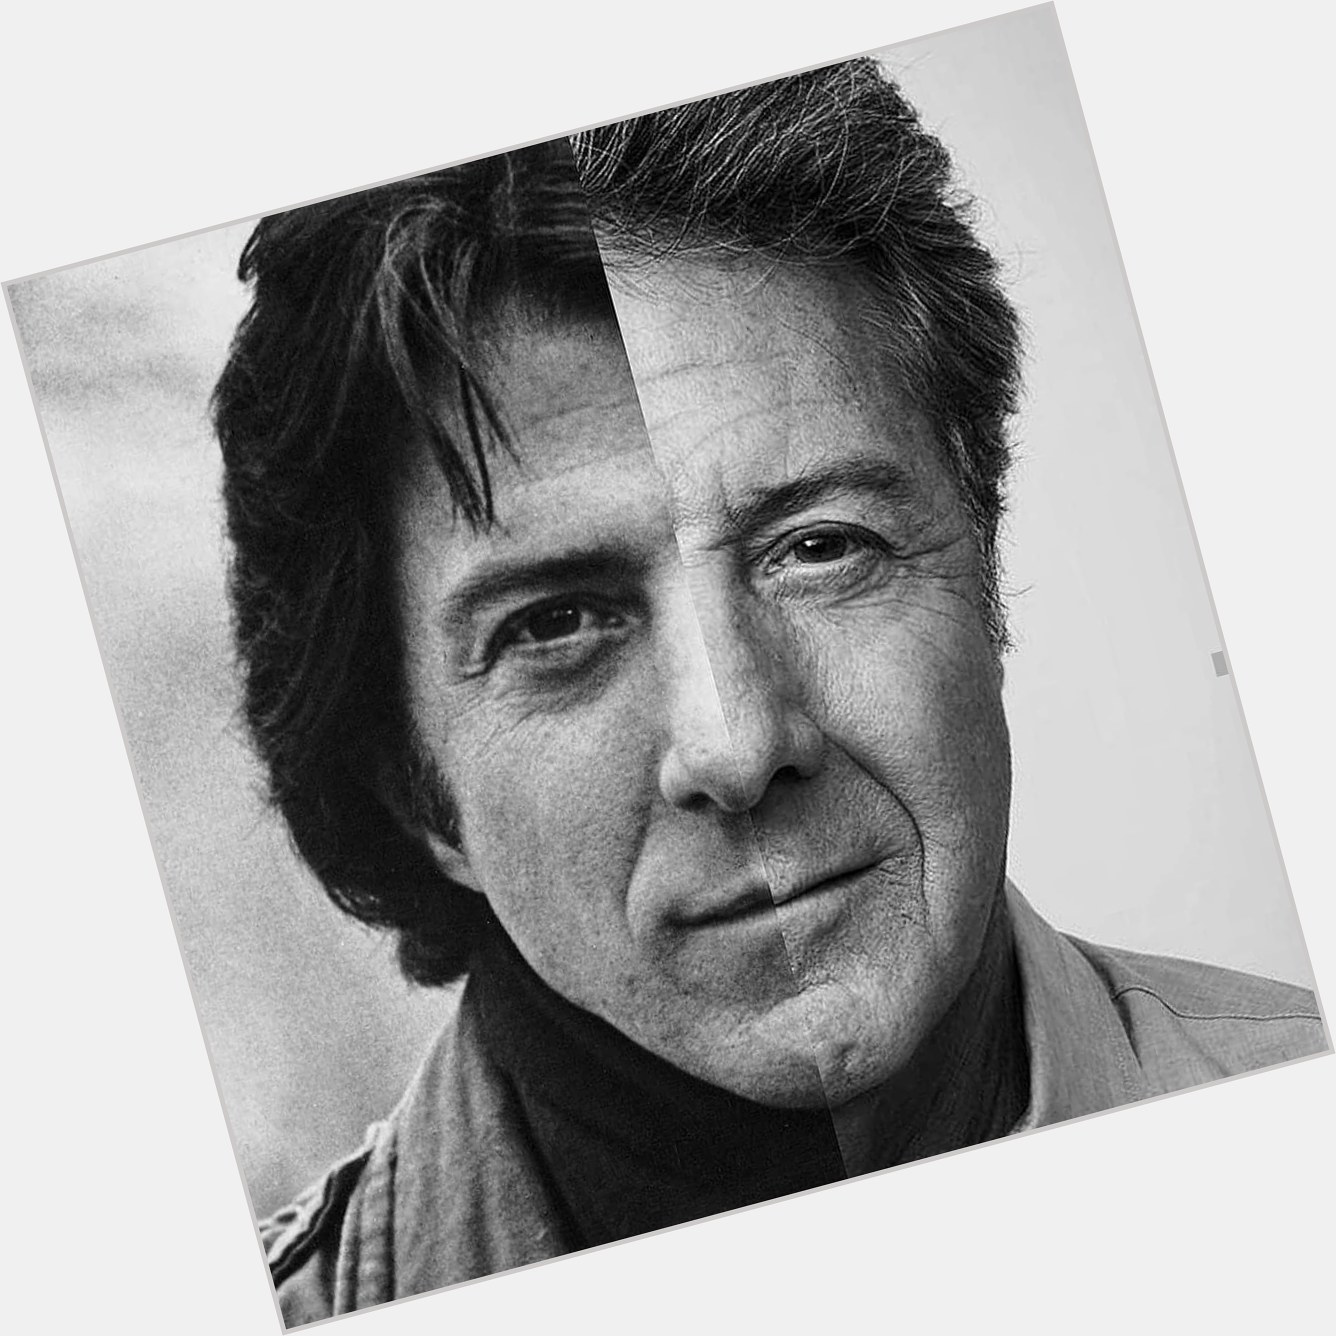  Happy birthday to Dustin Hoffman! 